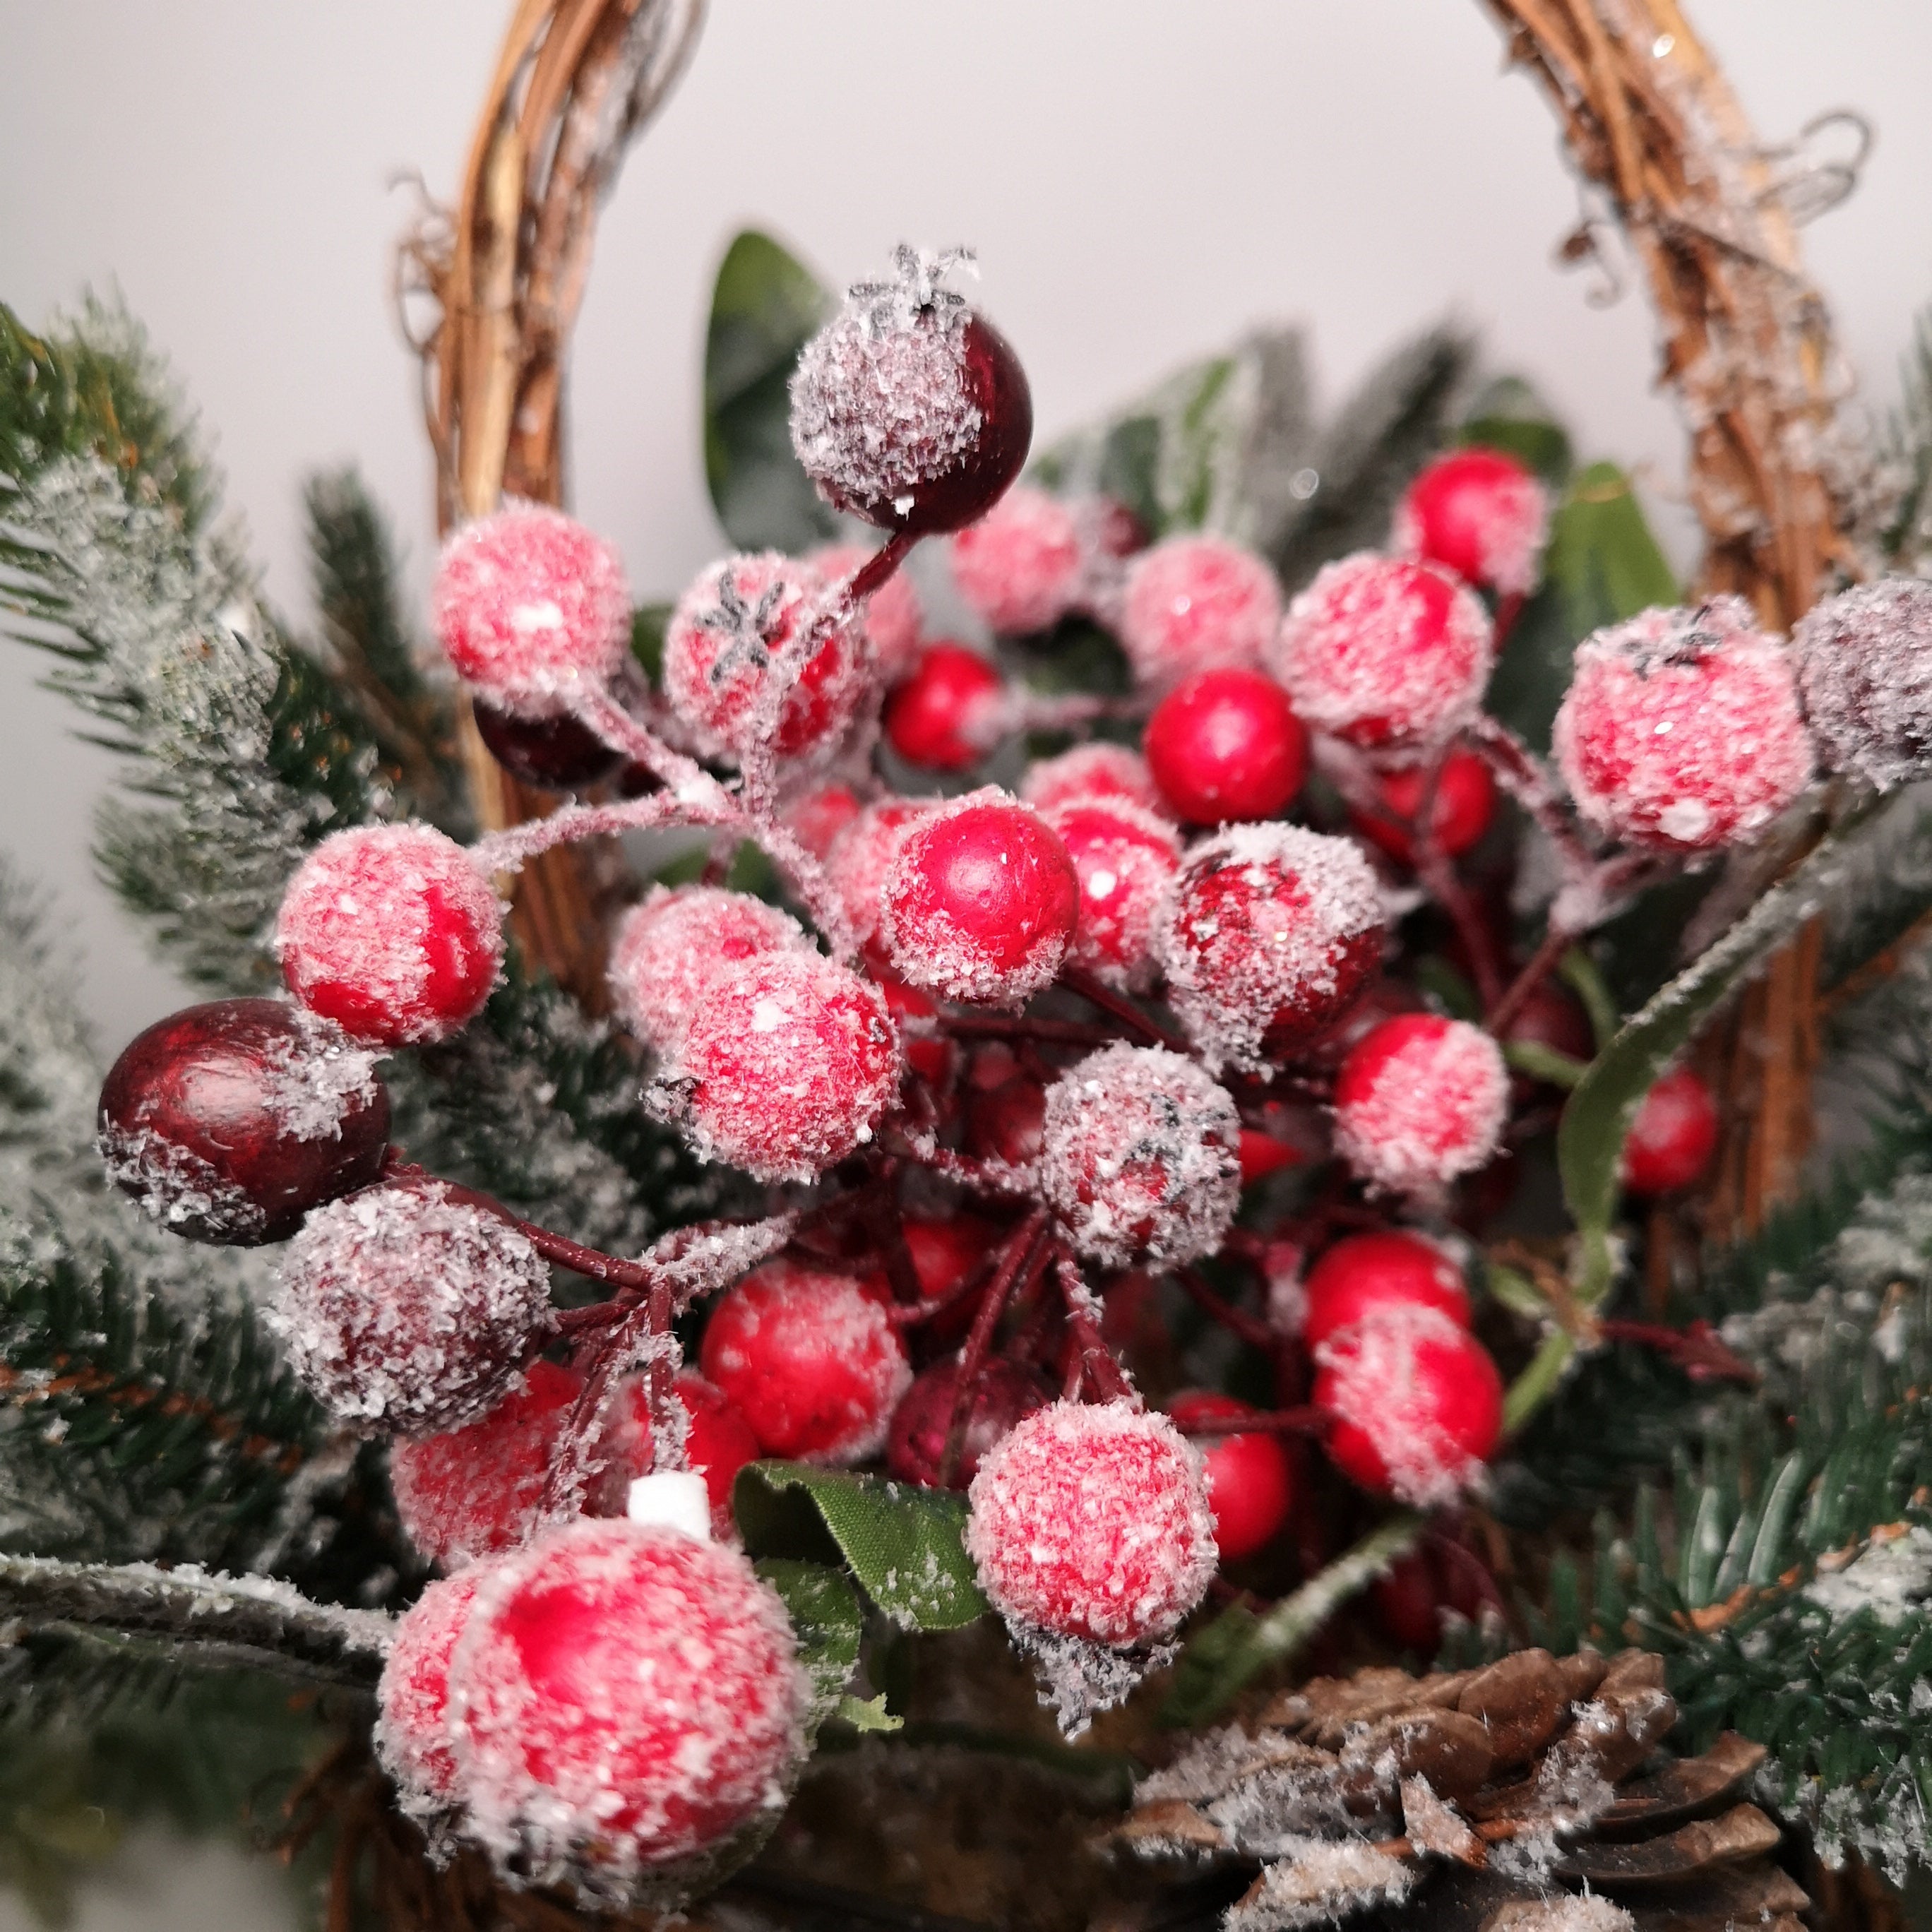 35cm Decorative Snow Flocked Christmas Basket Decoration with Berries & Pine Cones